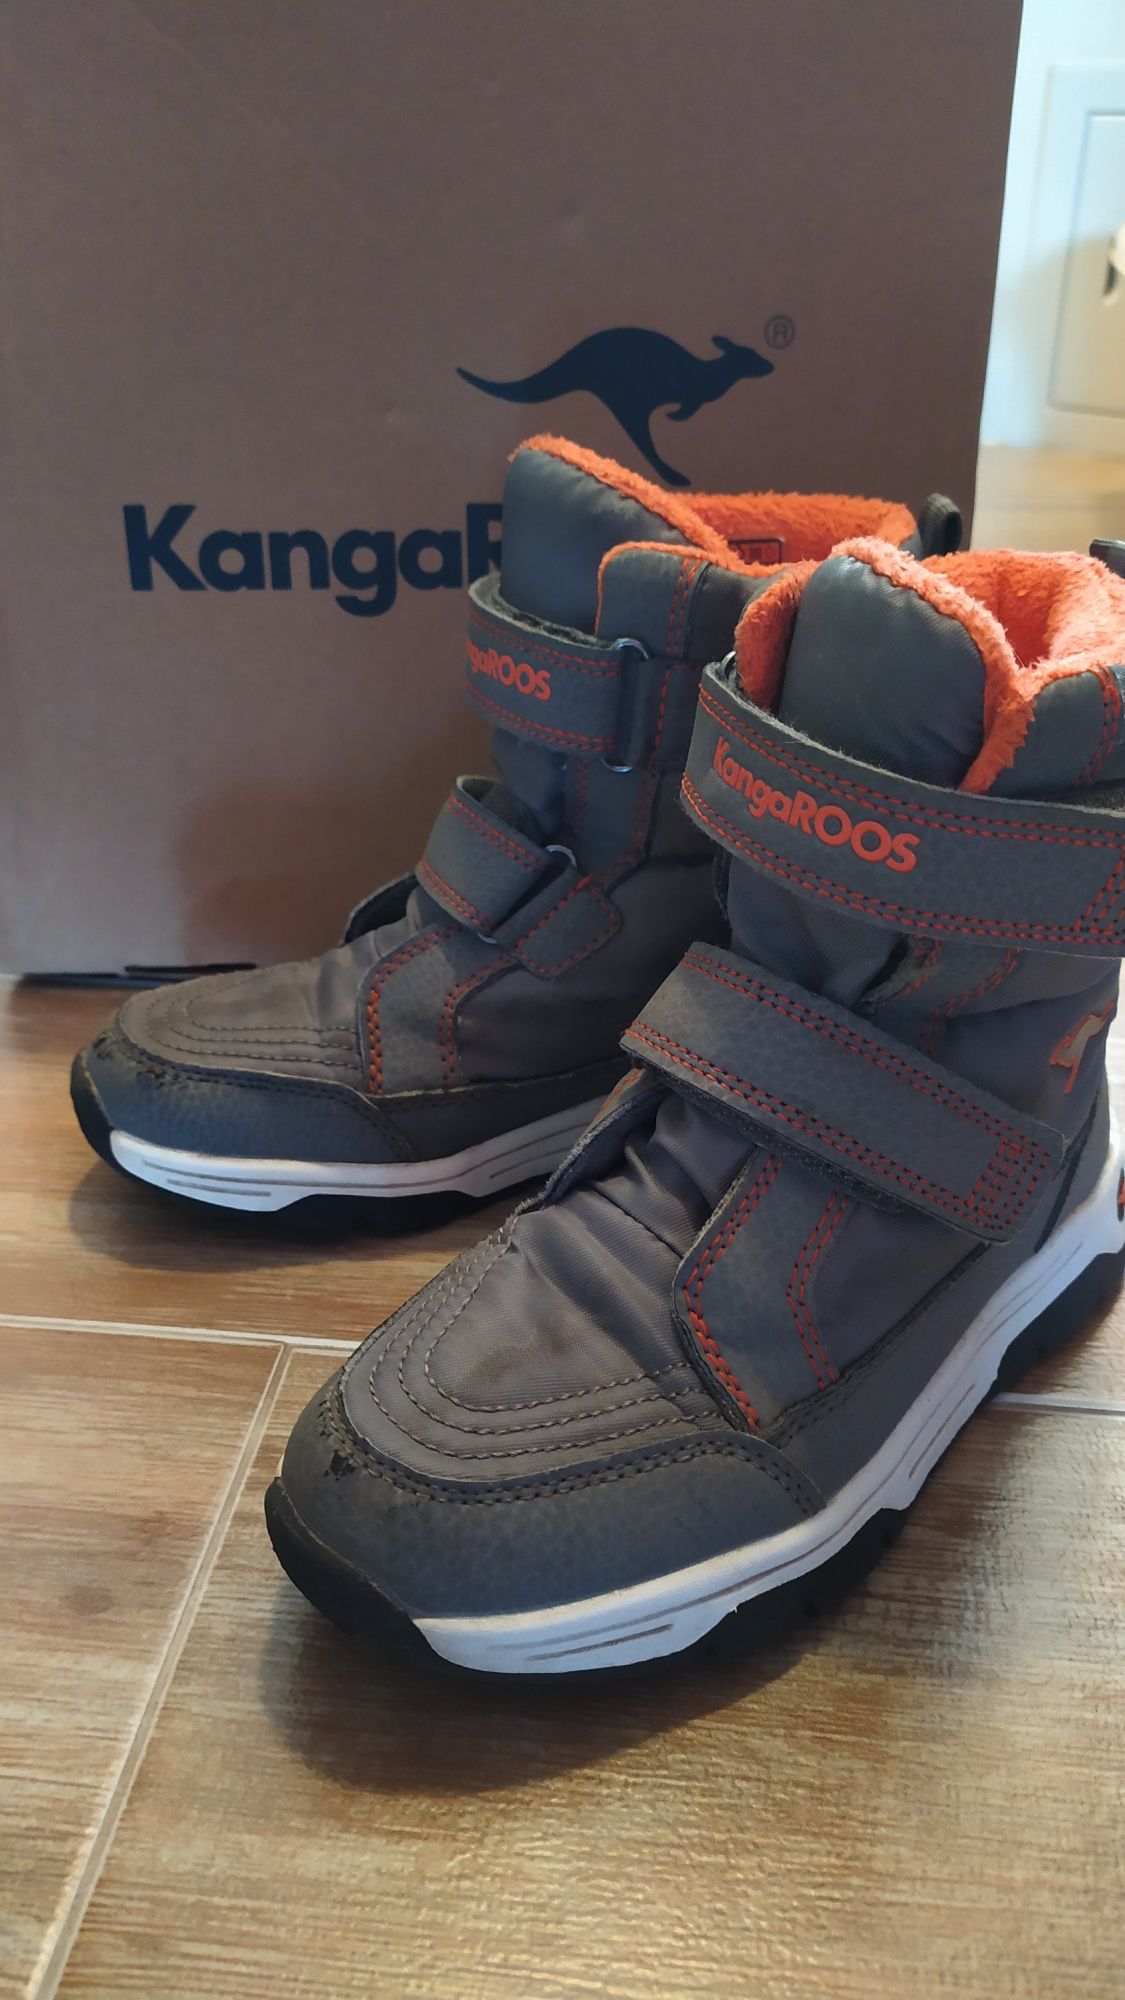 KangaROOS buty zimowe, śniegowce r. 30